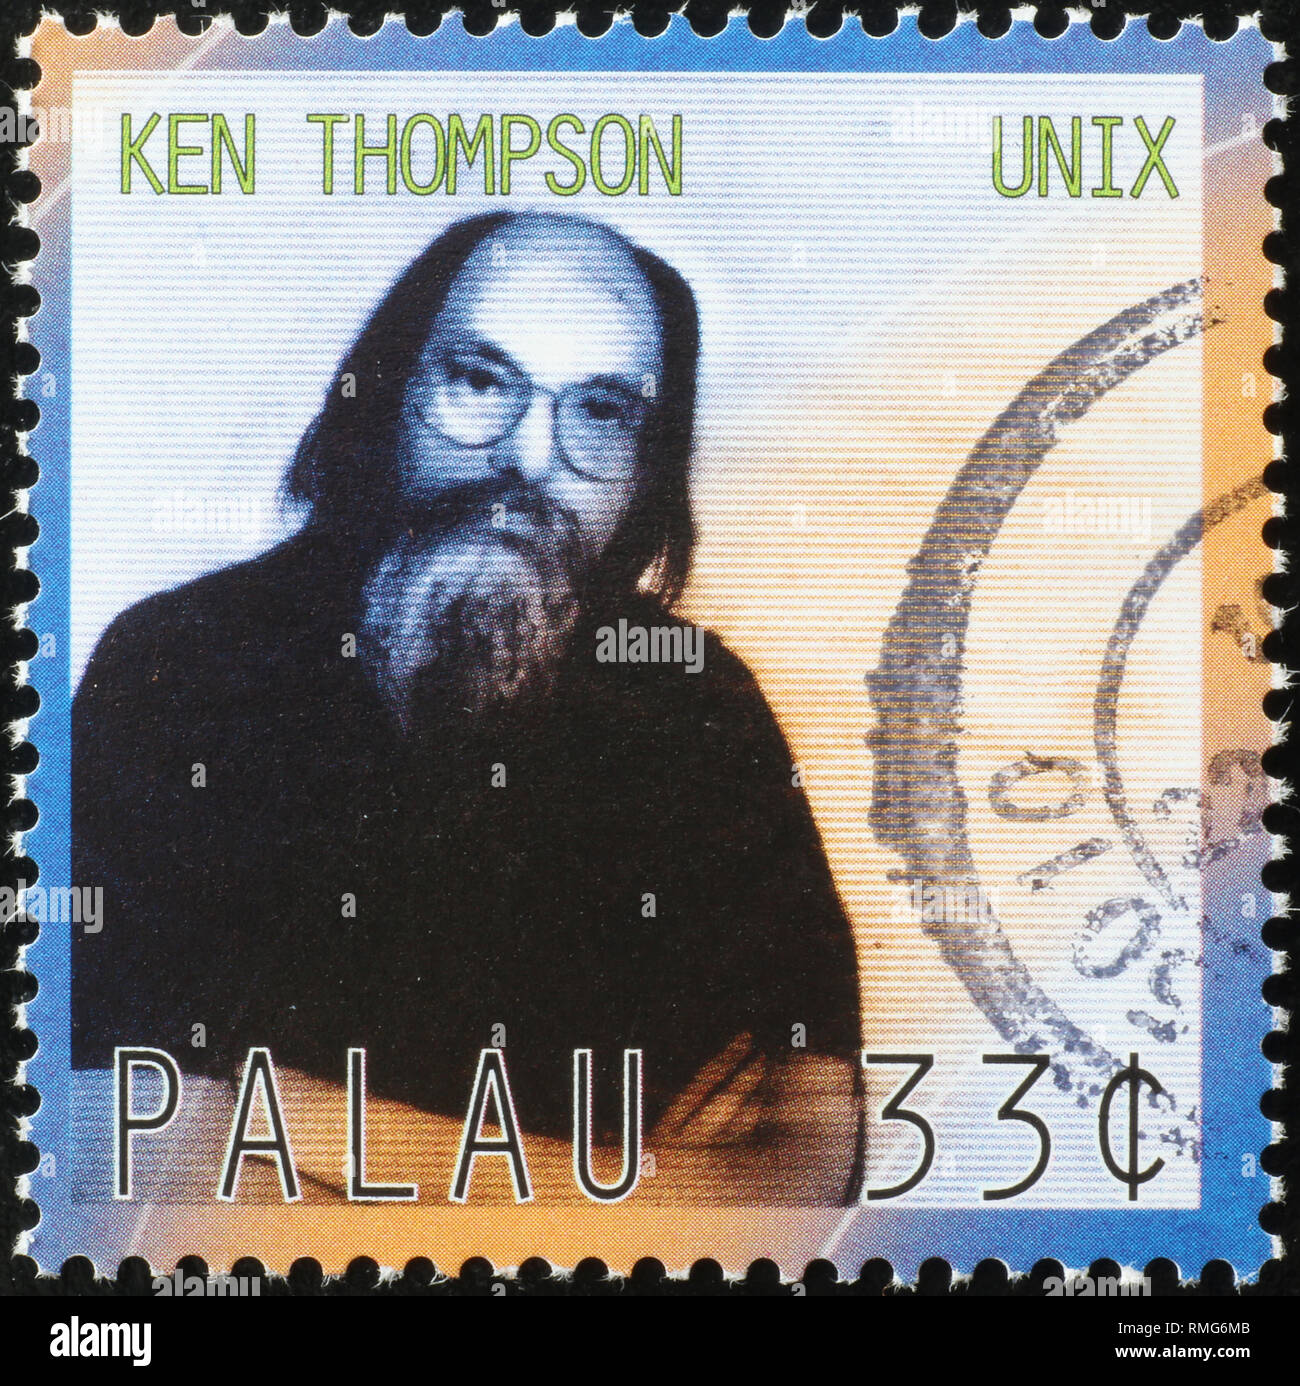 Computer scientist Ken Thompson on postage stamp Stock Photo